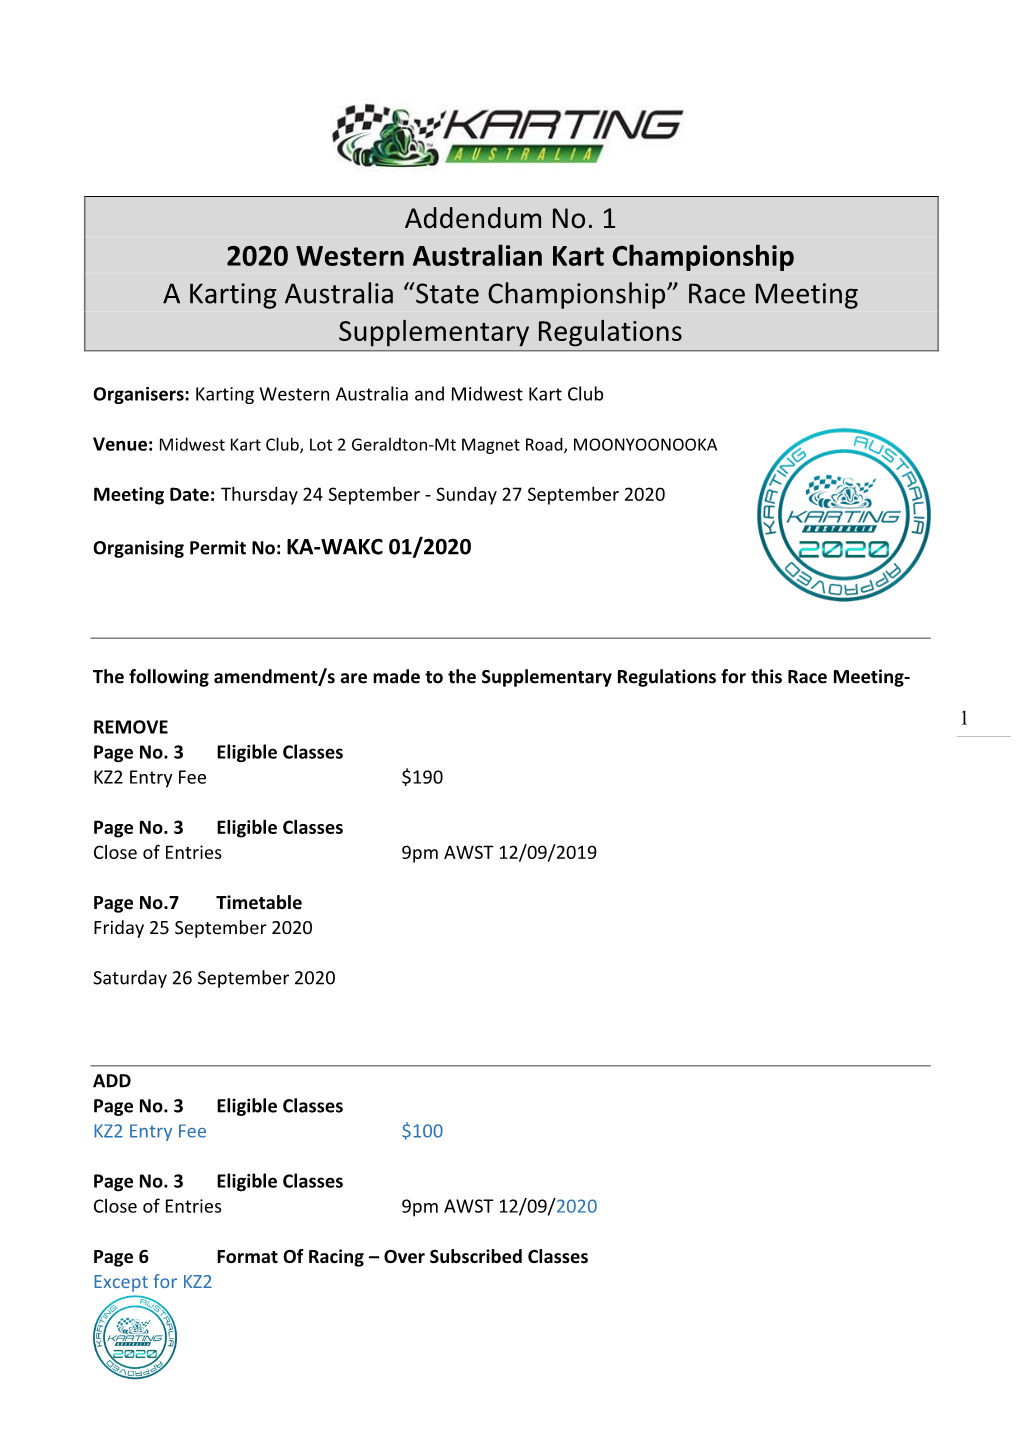 Addendum No. 1 2020 Western Australian Kart Championship a Karting Australia “State Championship” Race Meeting Supplementary Regulations